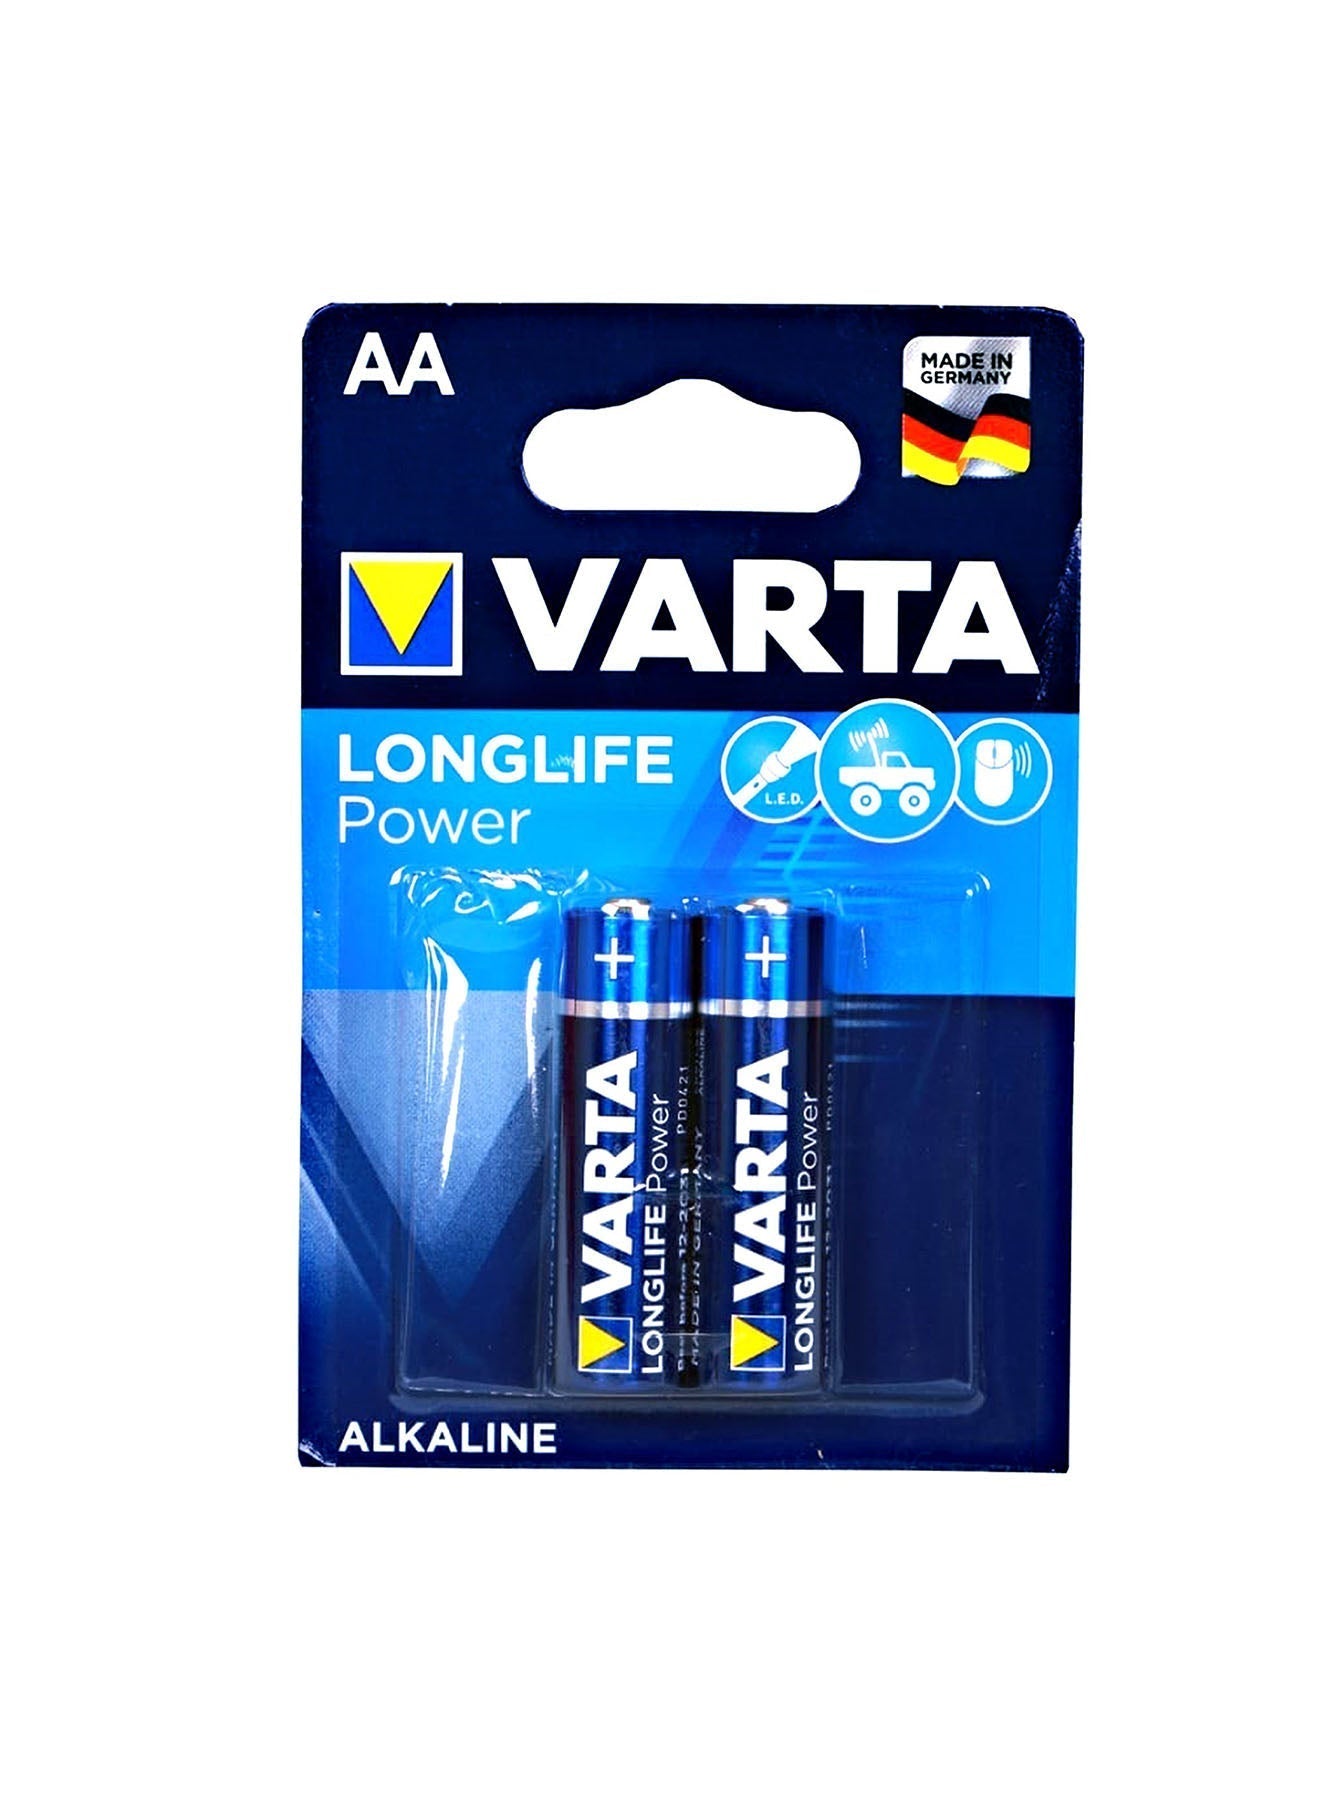 Varta Long Life Power AA Alkaline 2 units Value Pack of 2 